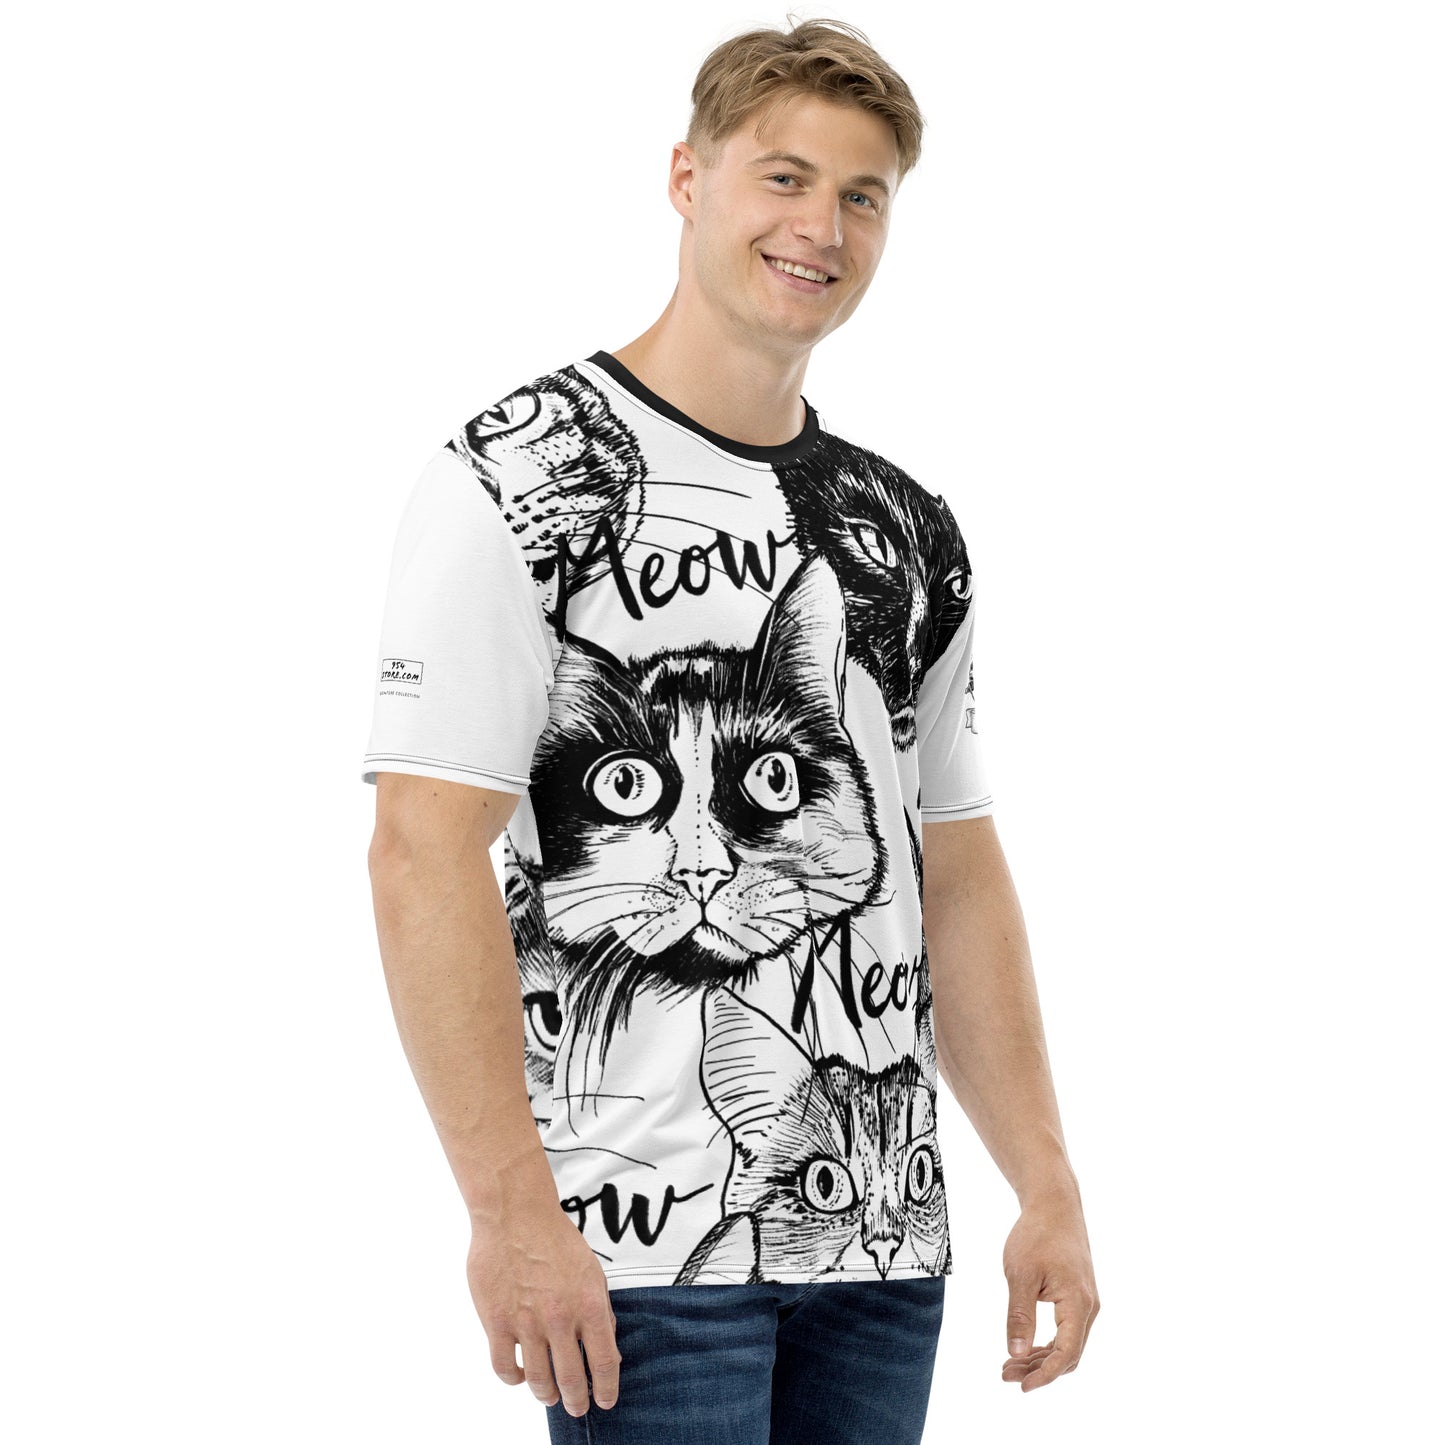 Meow 954 Men's t-shirt